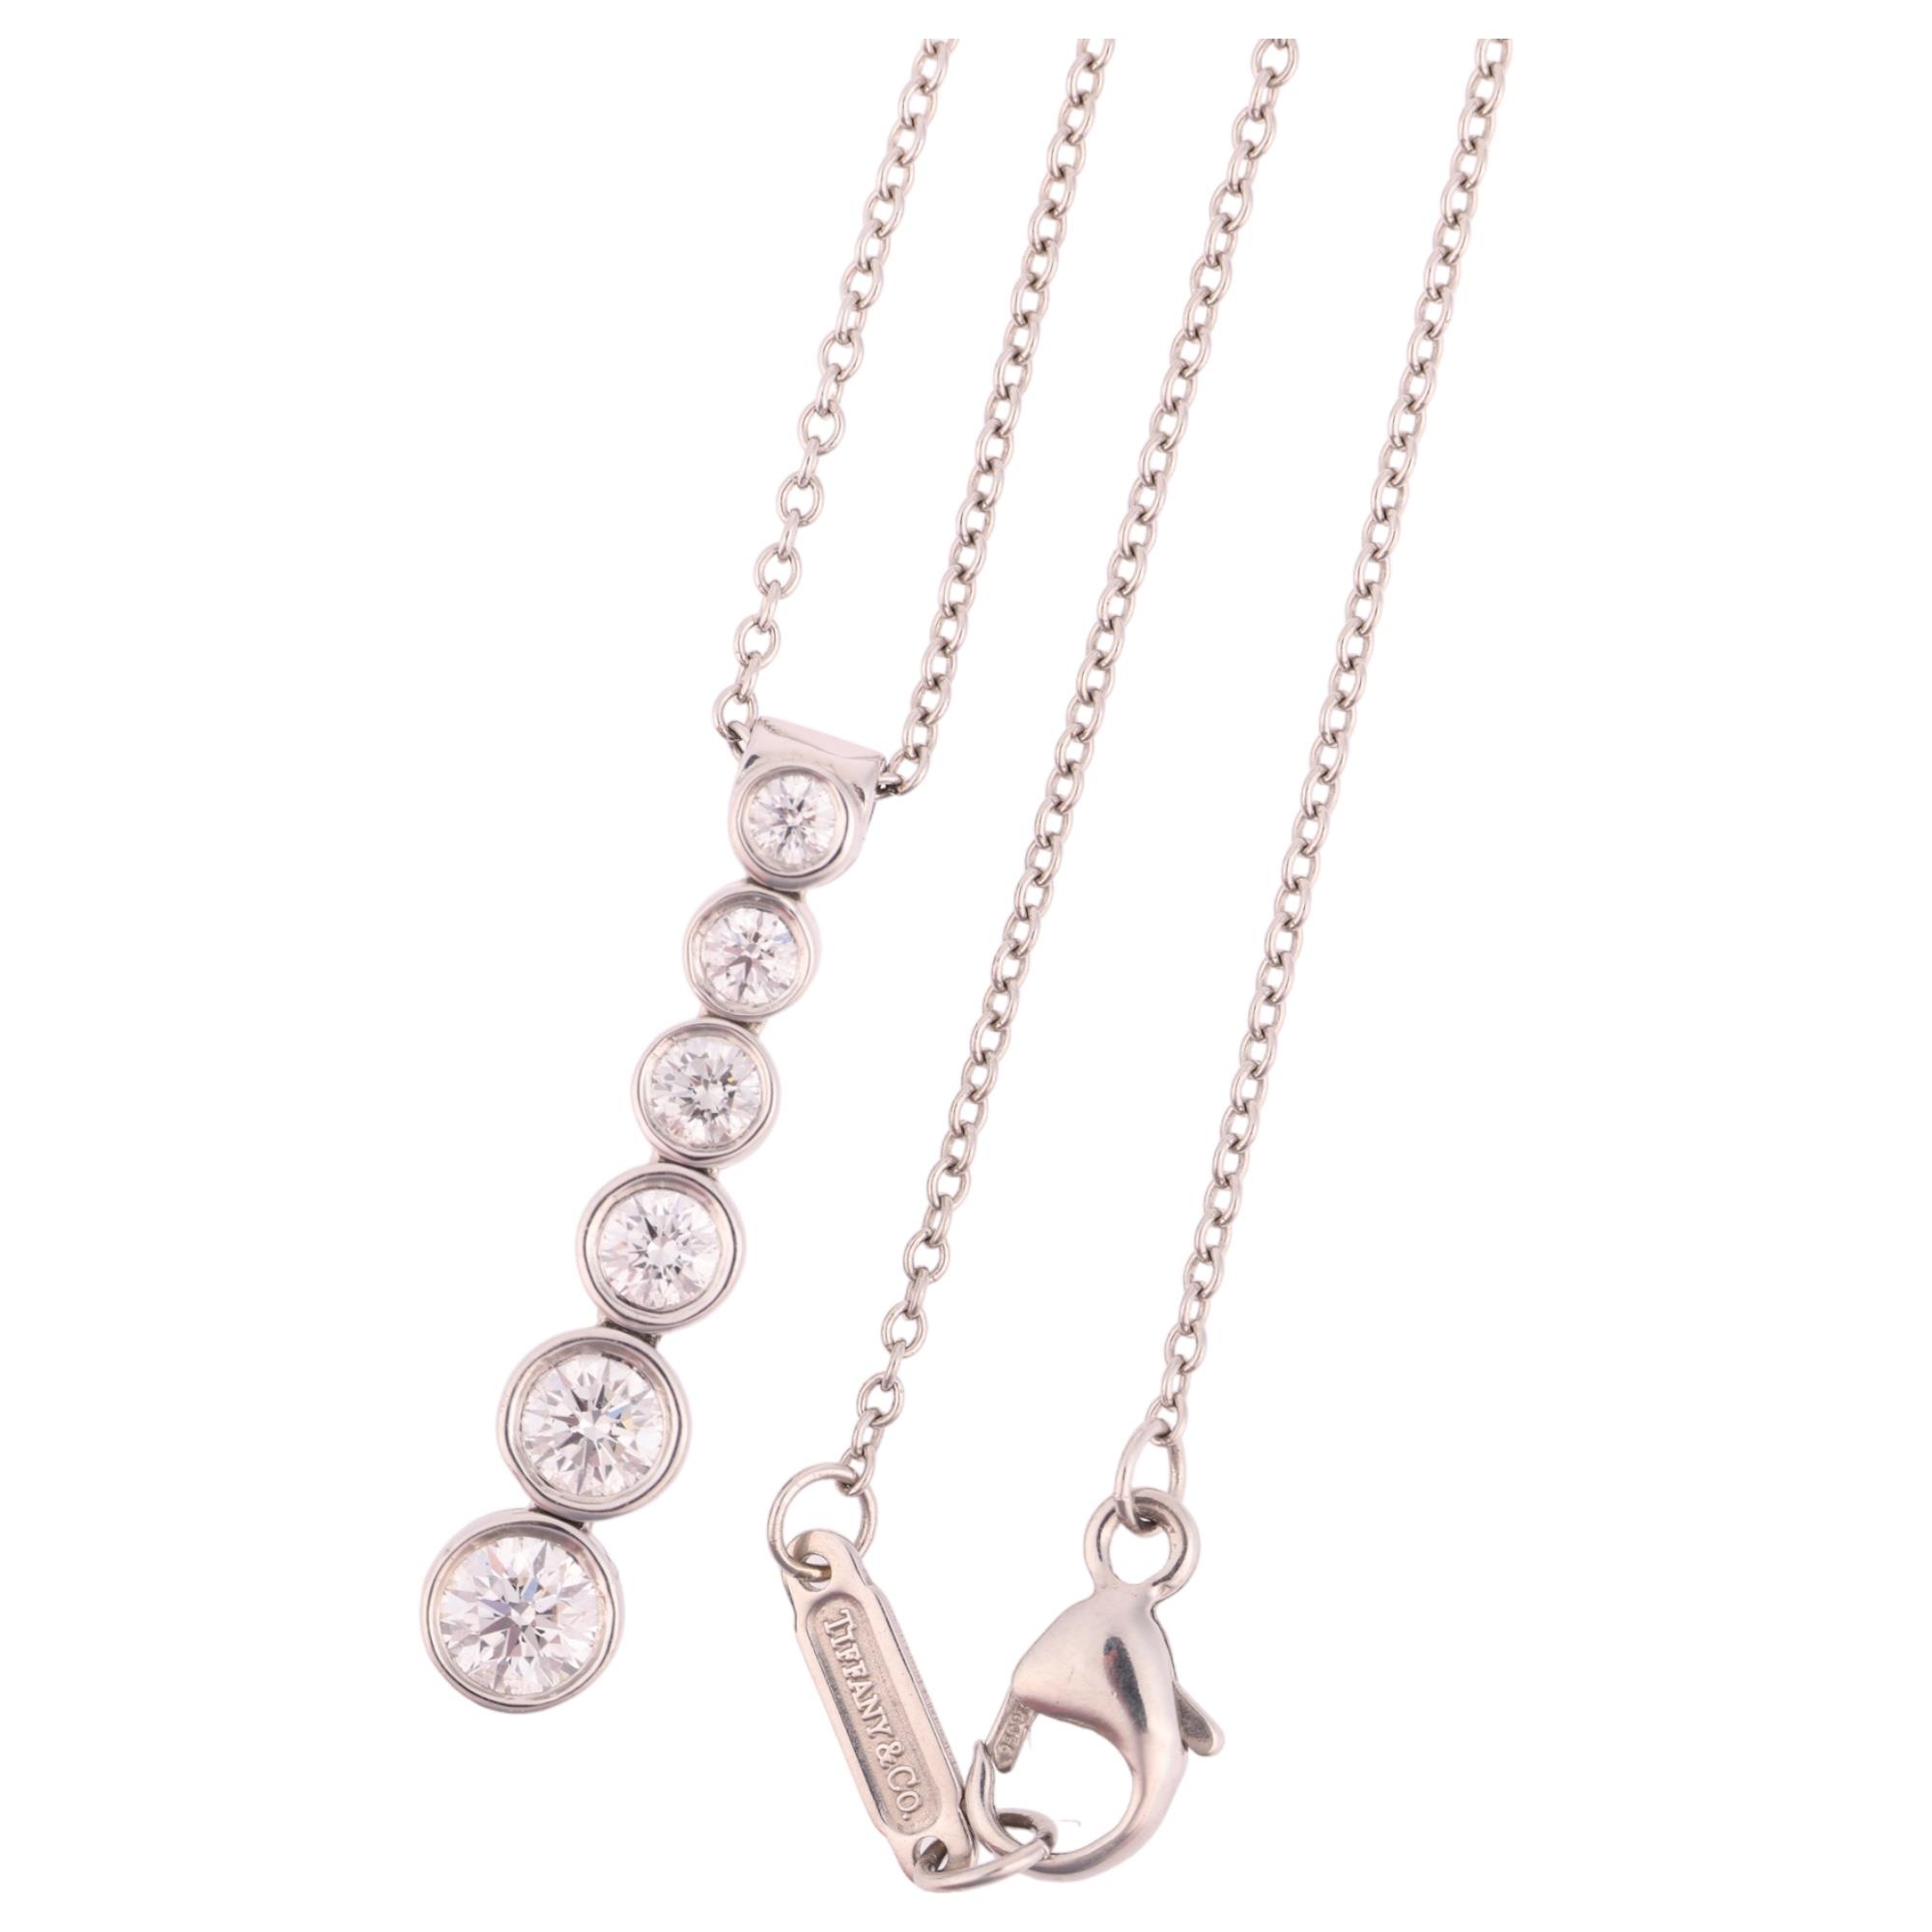 TIFFANY & CO - a platinum diamond Jazz pendant necklace, circa 2003, set with graduated modern round - Image 2 of 4